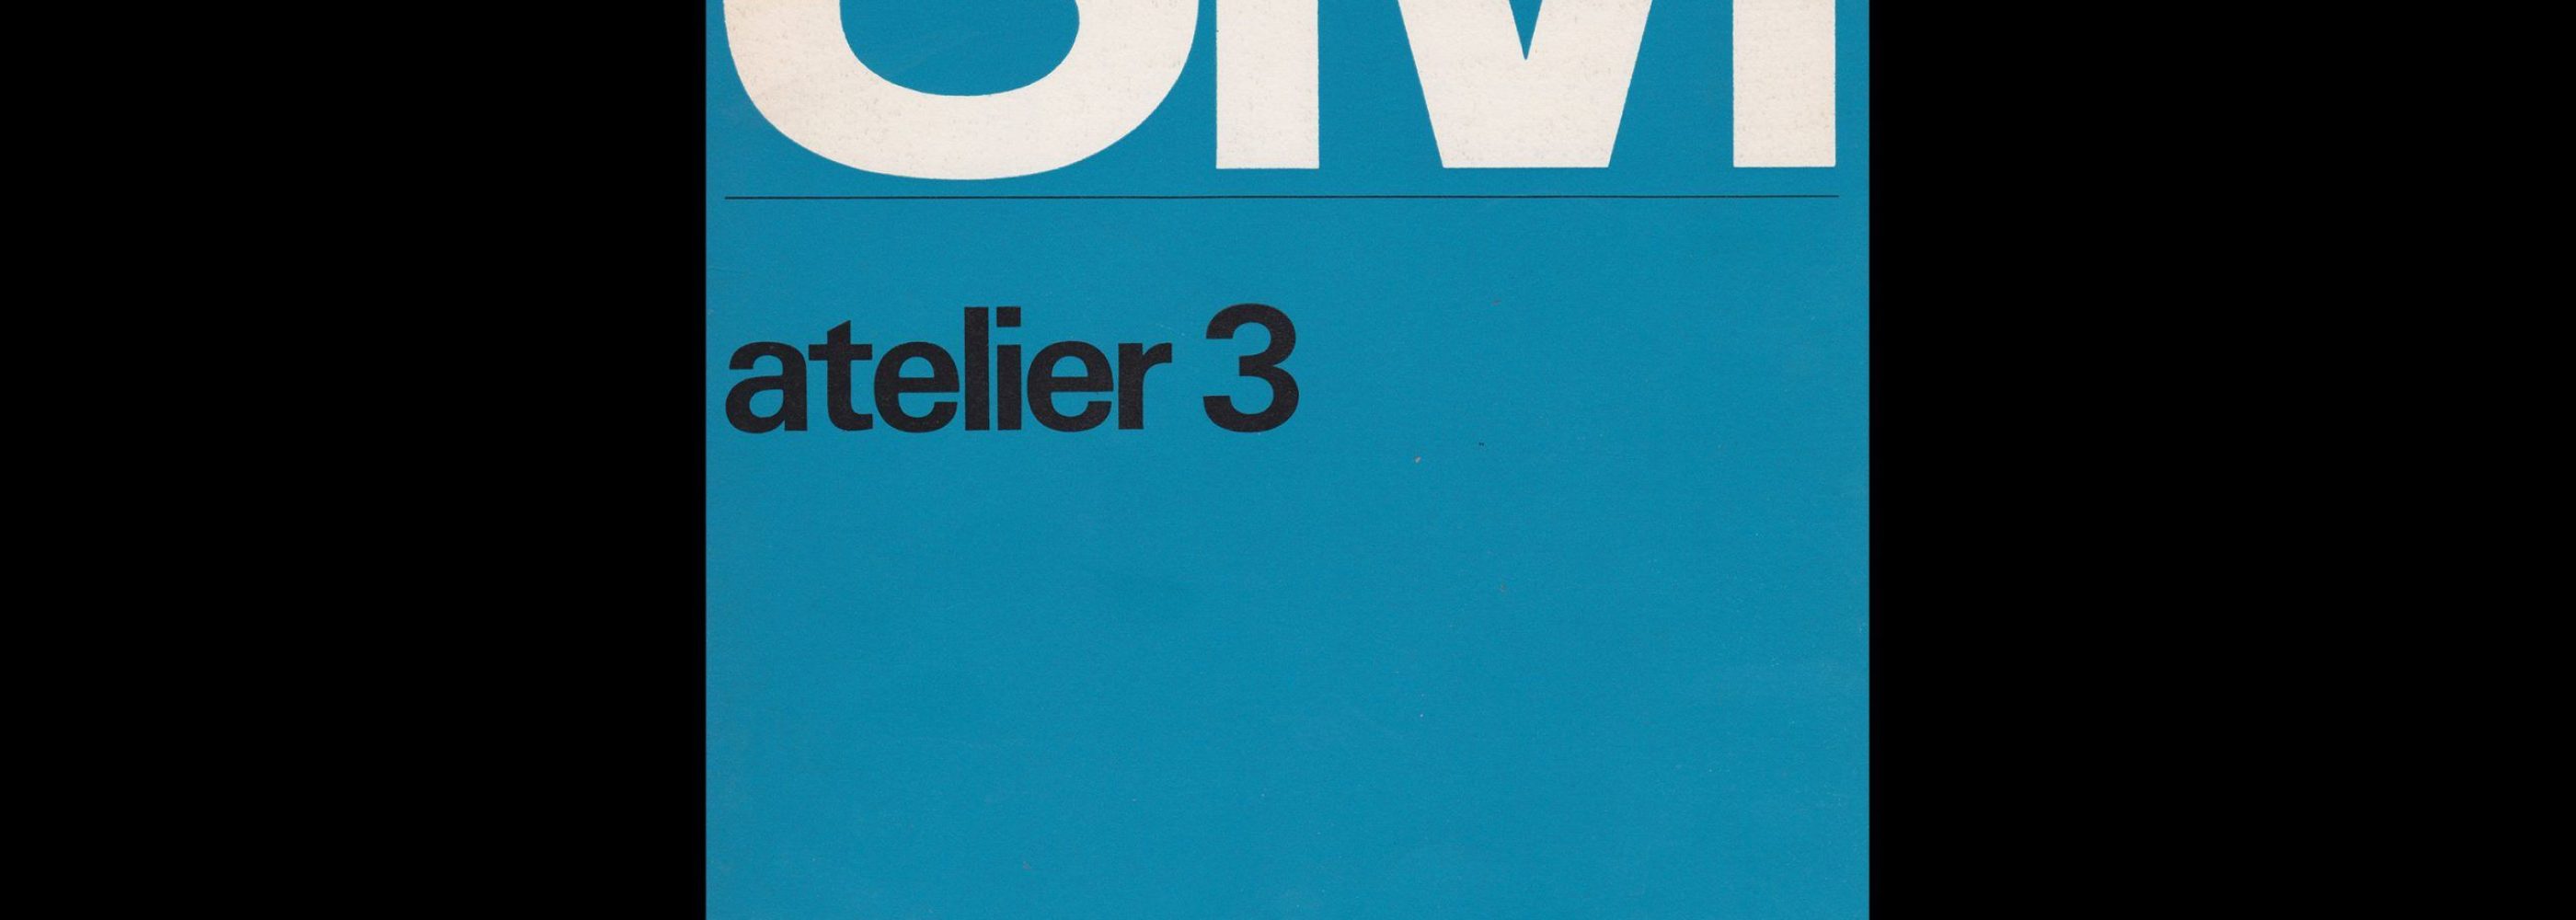 Atelier 3, Stedelijk Museum, Amsterdam, 1966 designed by Wim Crouwel and Ben Bos. (Total Design)